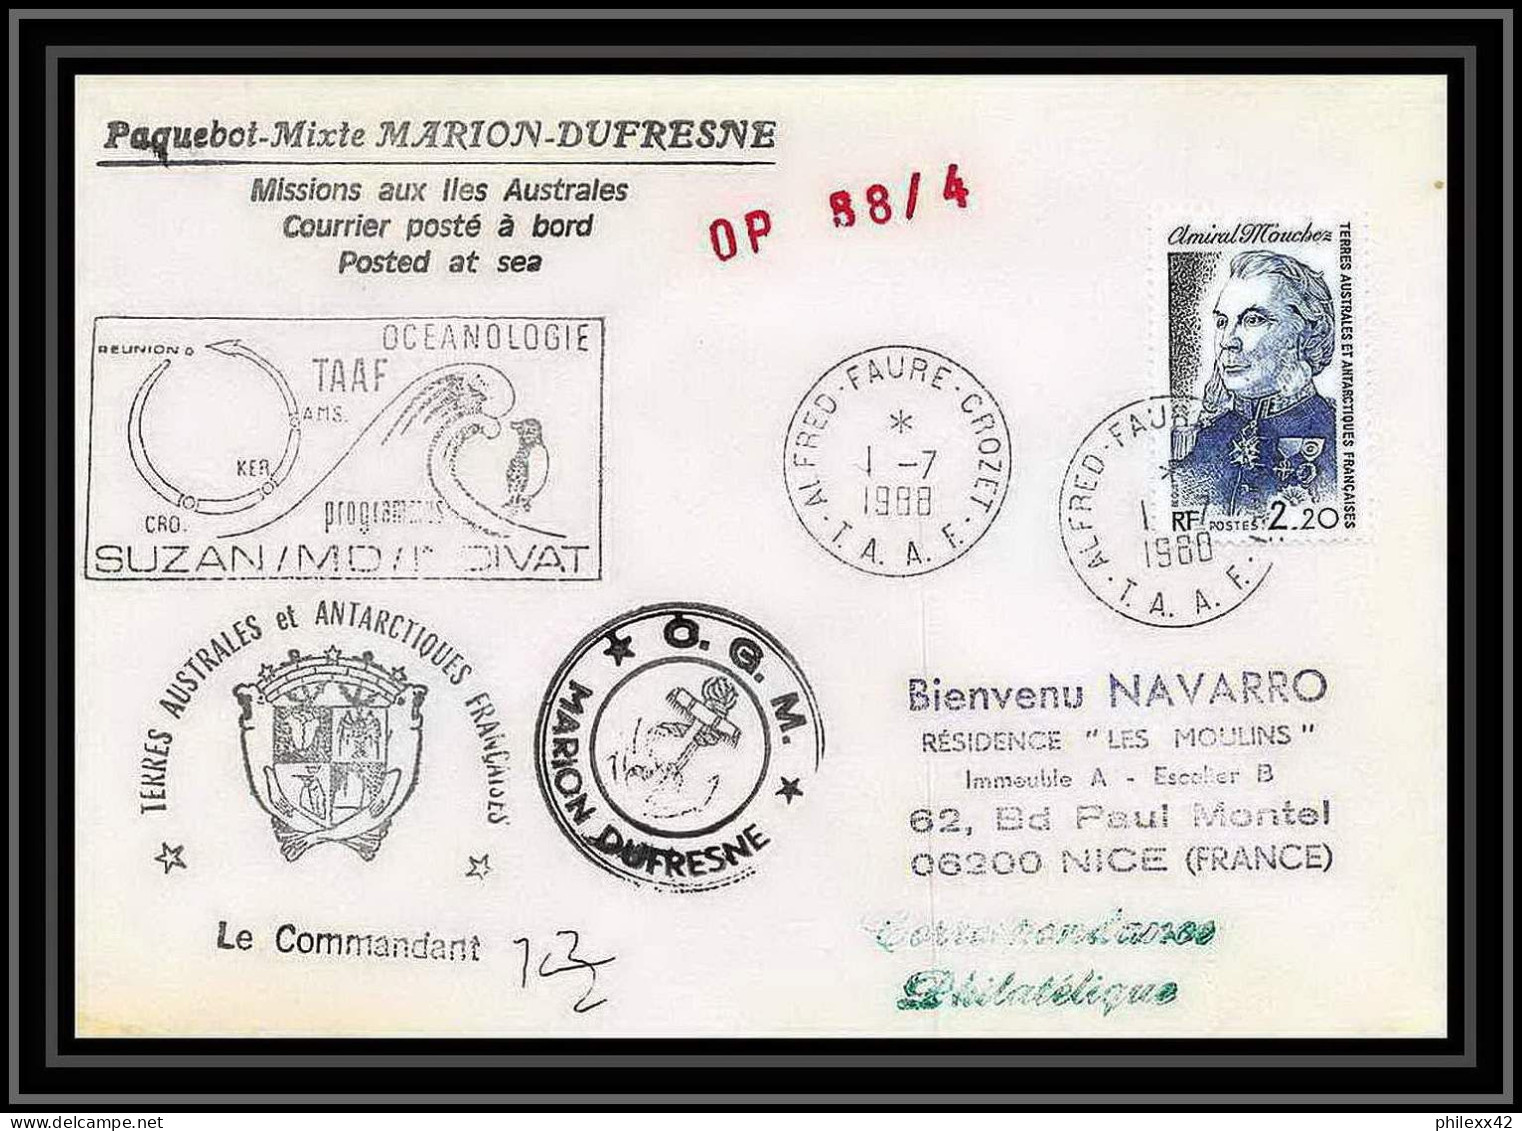 1575 88/4 Océanologie Md Indivat 7/7/1988 Signé Signed TAAF Antarctic Terres Australes Lettre (cover) - Expediciones Antárticas